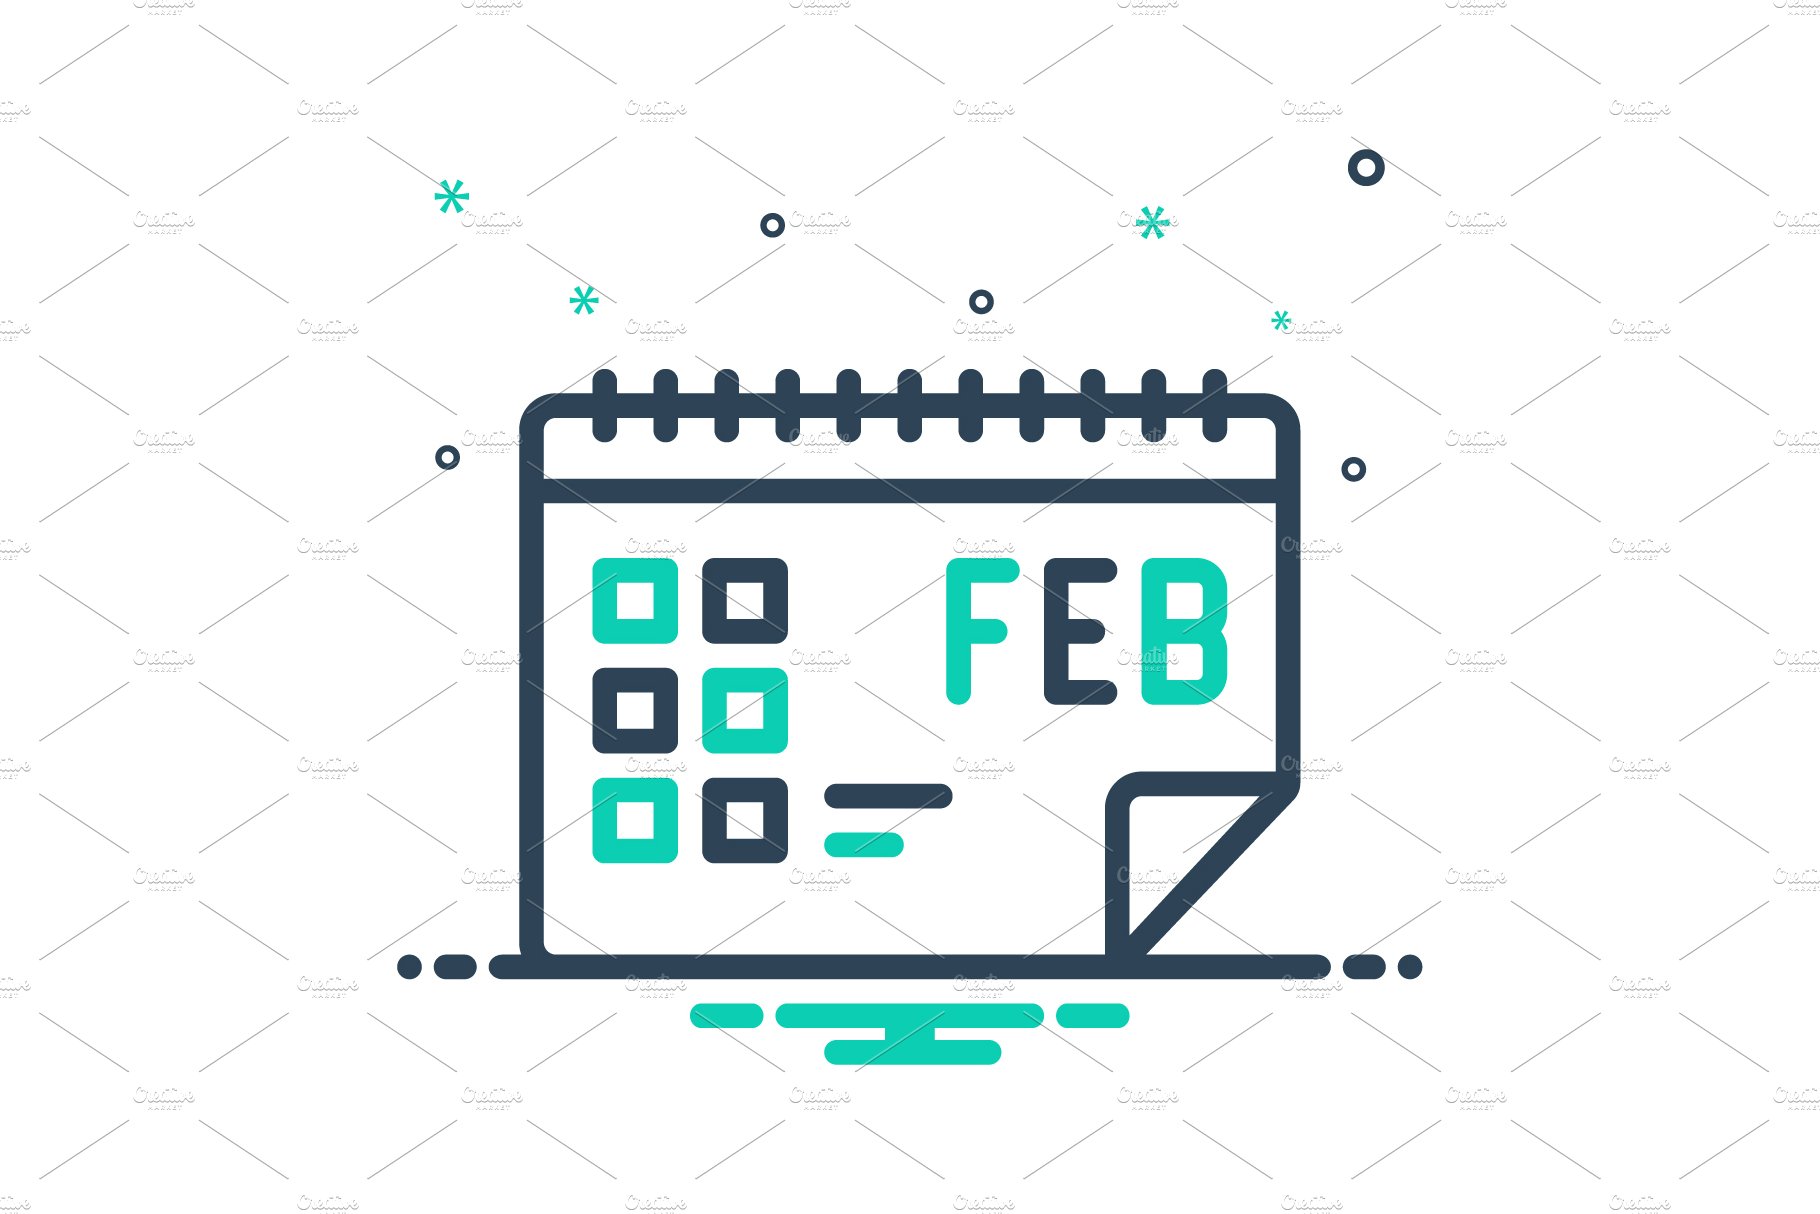 February calendar mix icon cover image.